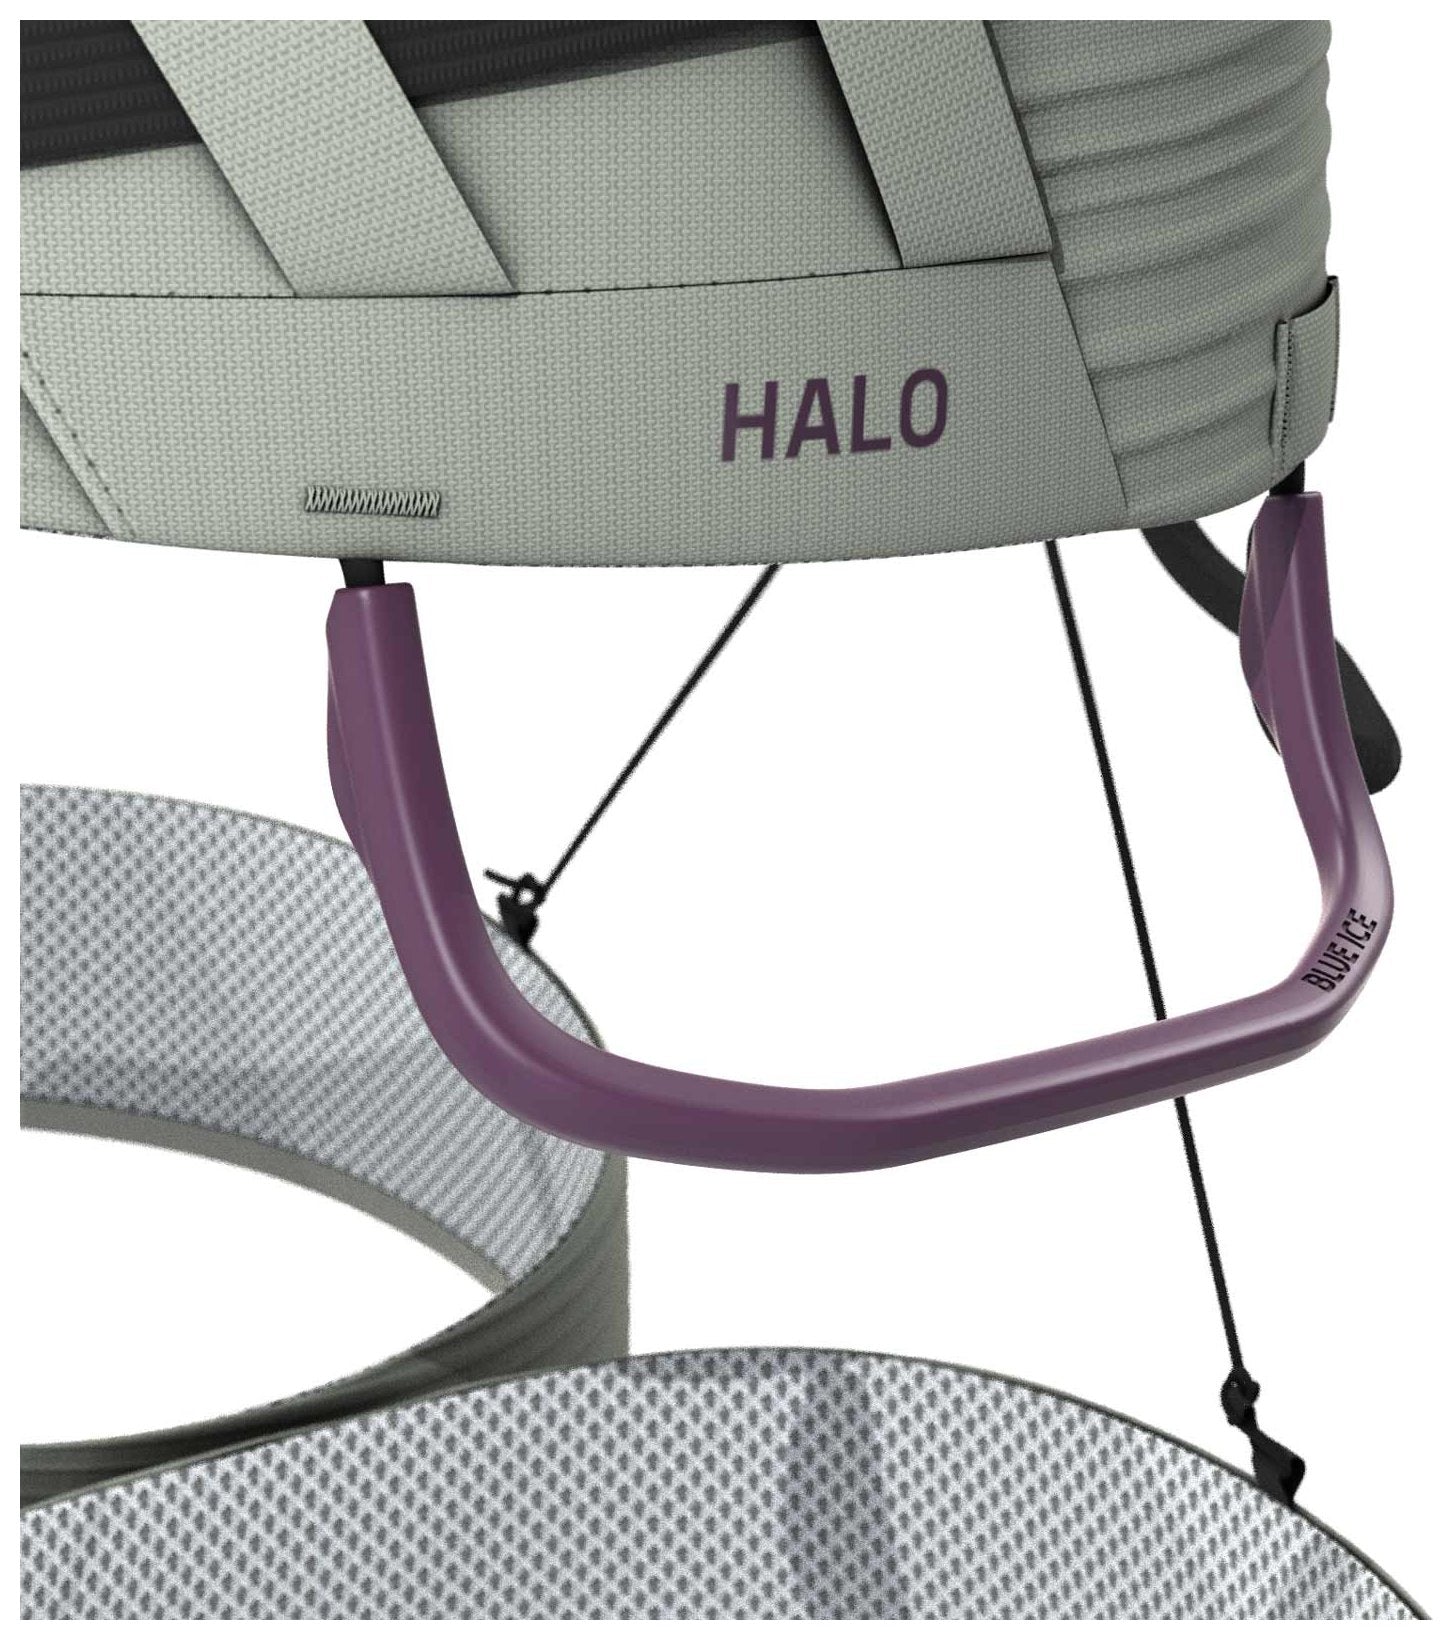 Halo, climbing harness